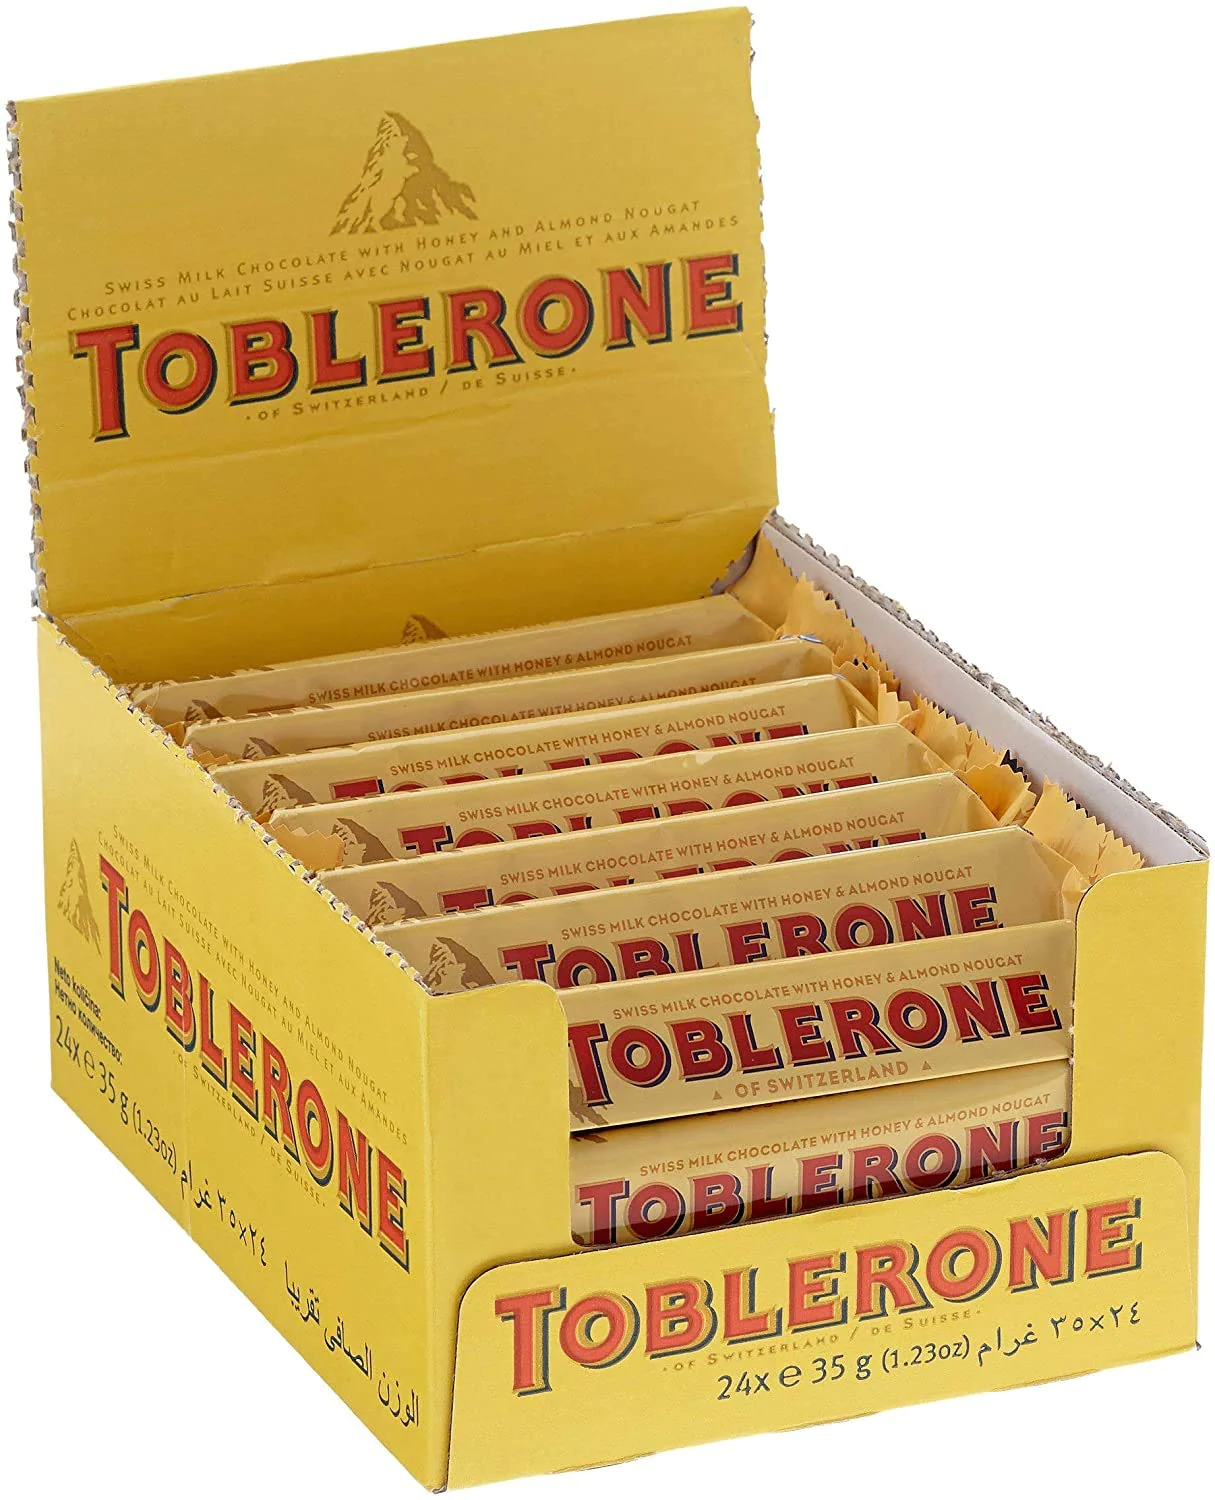 TOBLERONE CHOCLATE 24X35G